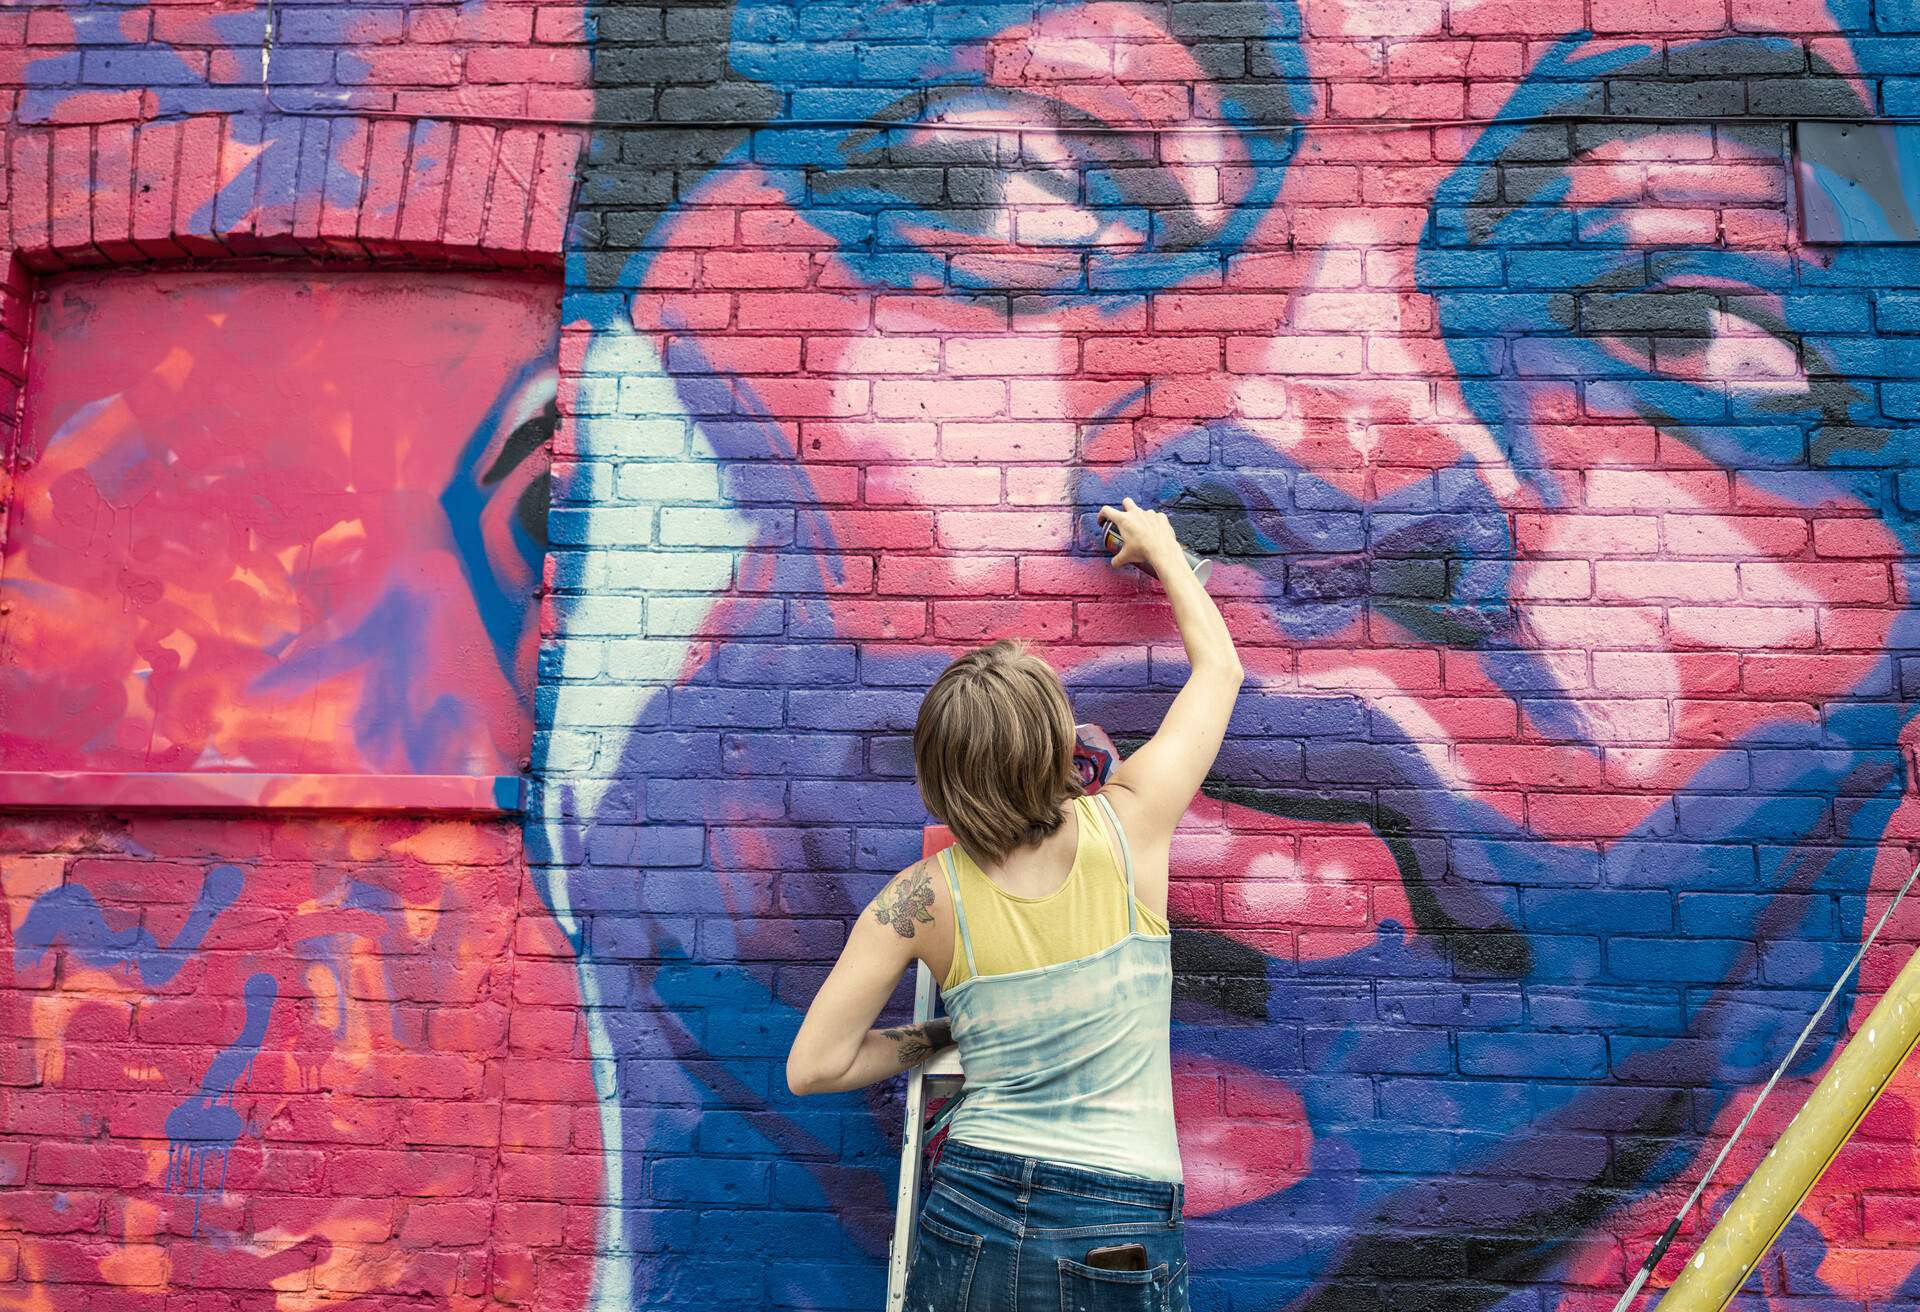 A female artist spray paints a colourful mural on a brick wall.